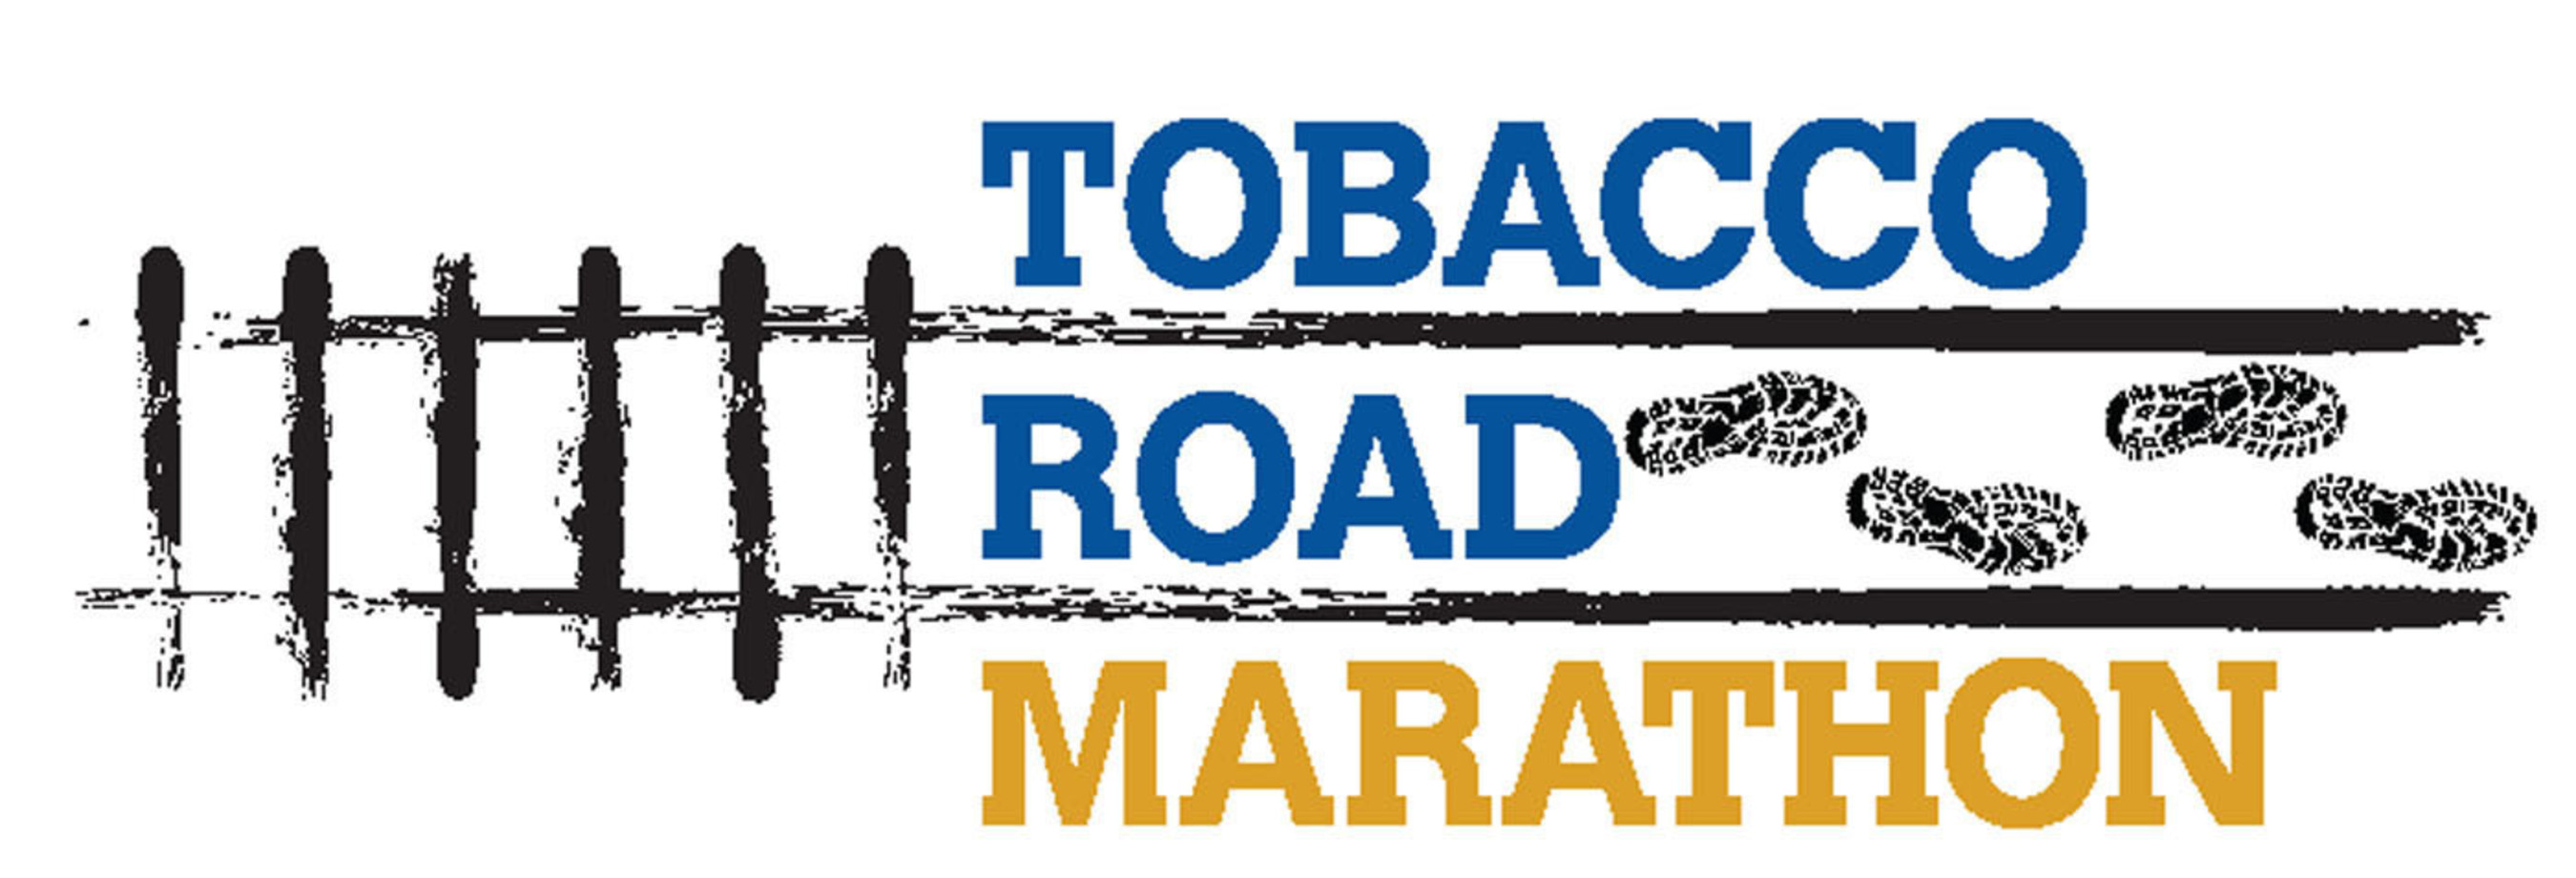 Tobacco Road Marathon http://tobaccoroadmarathon.com/.